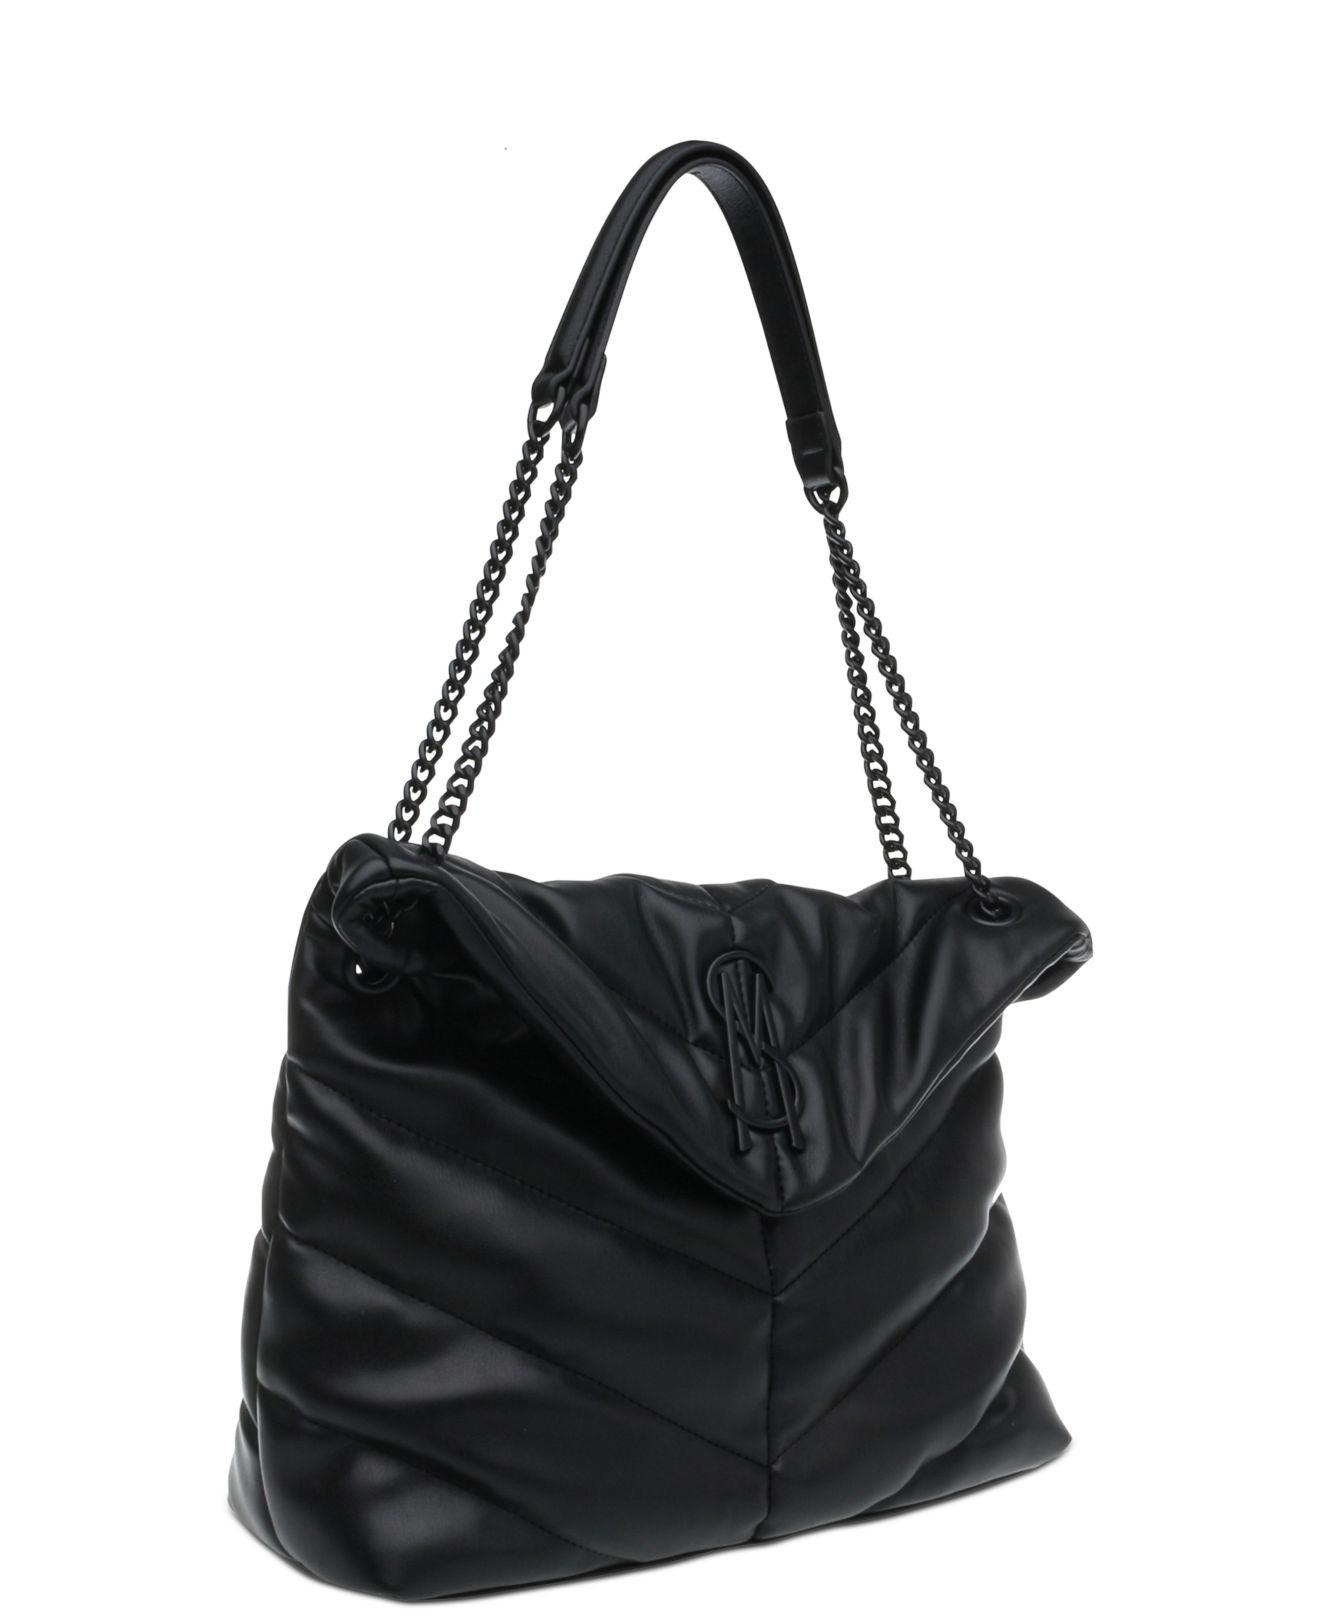 Steve Madden Britta Shoulder Bag in Black | Lyst Canada